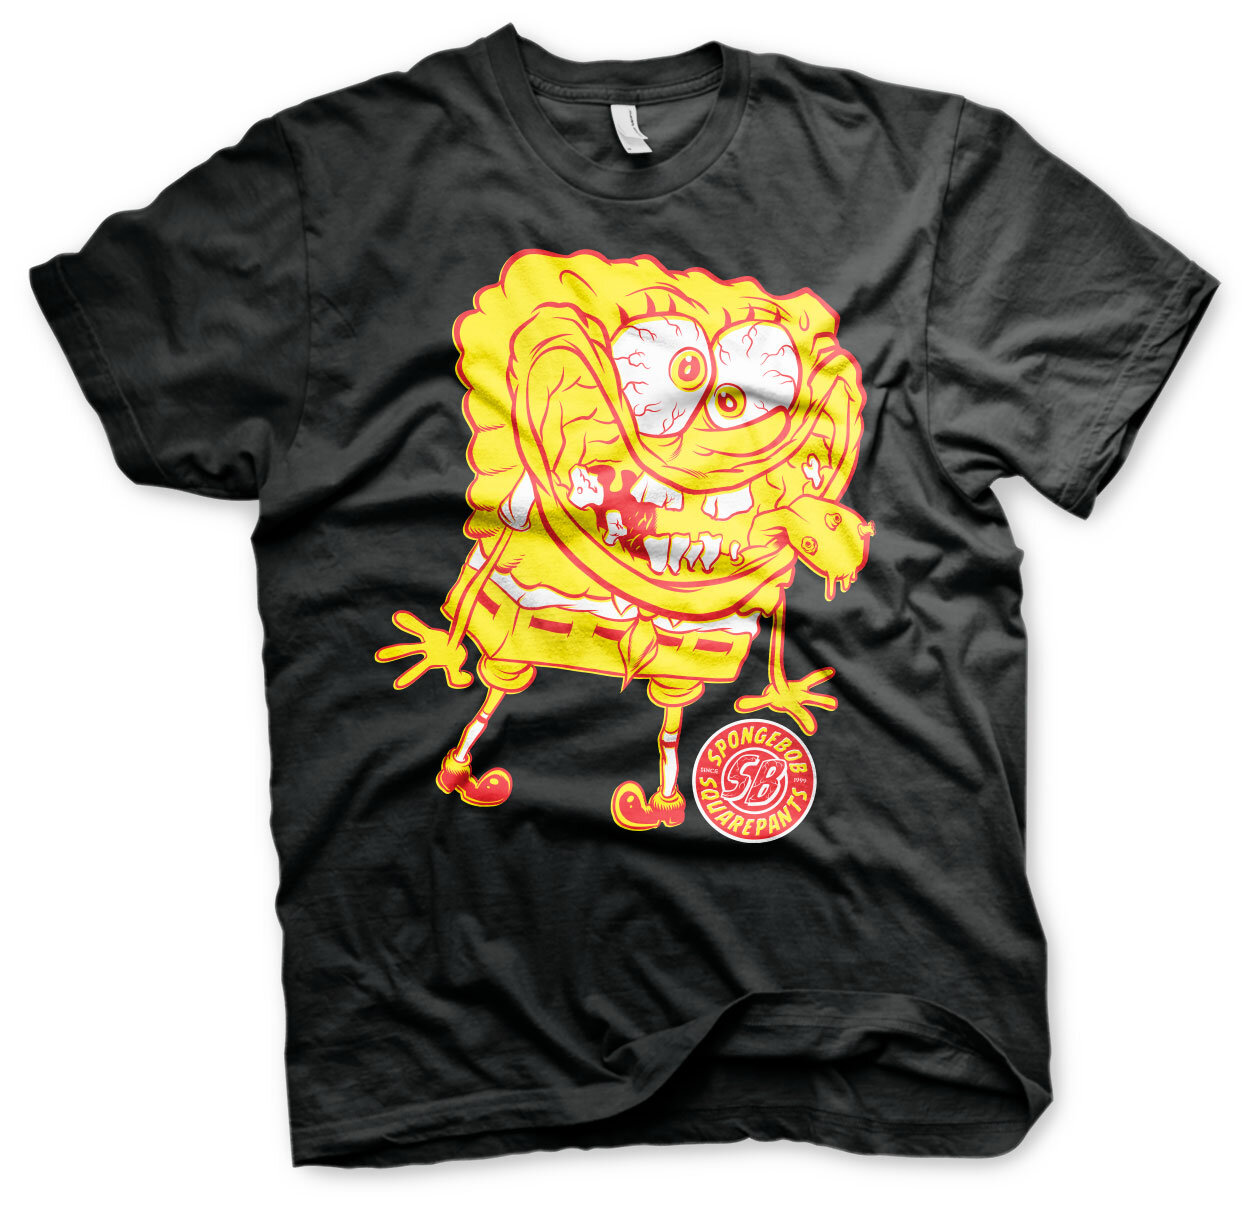 Spongebob Squarepants - Wierd T-Shirt